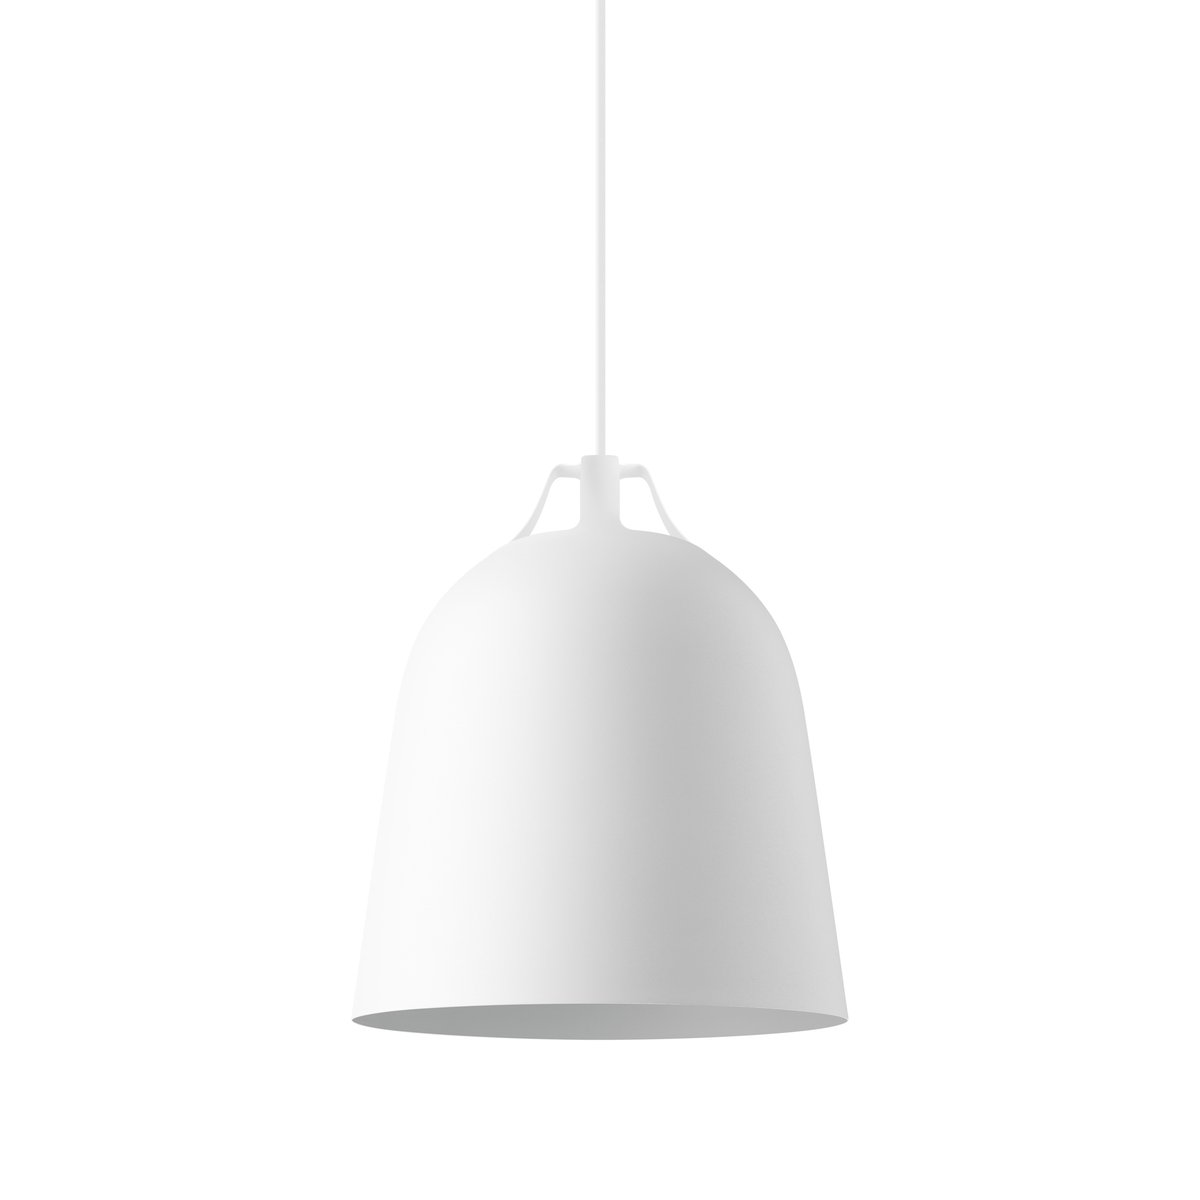 Eva Solo Clover hanglamp medium Ø29 cm Wit